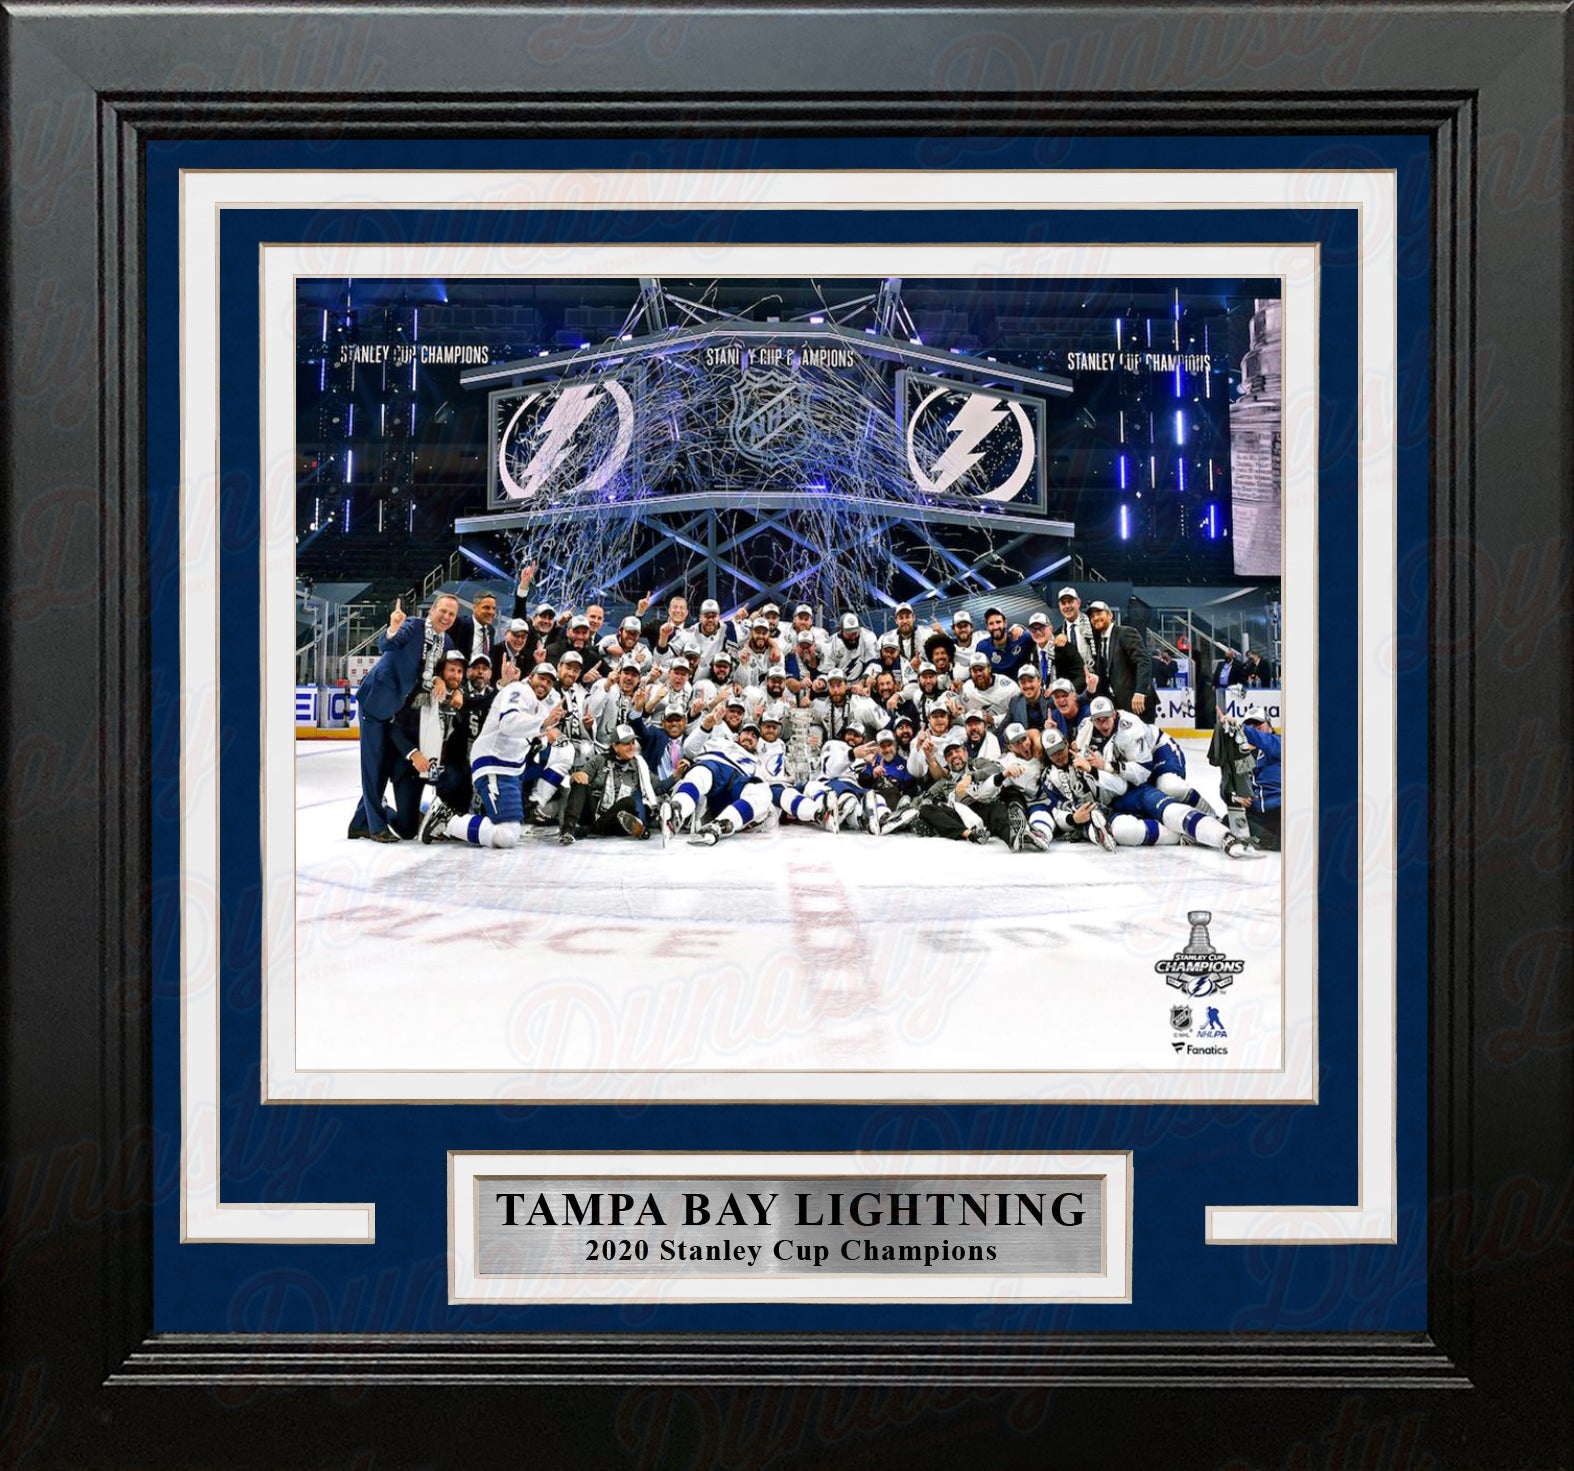 Tampa Bay Lightning 2020 Stanley Cup Champions Celebration 8" x 10" Framed Hockey Photo - Dynasty Sports & Framing 